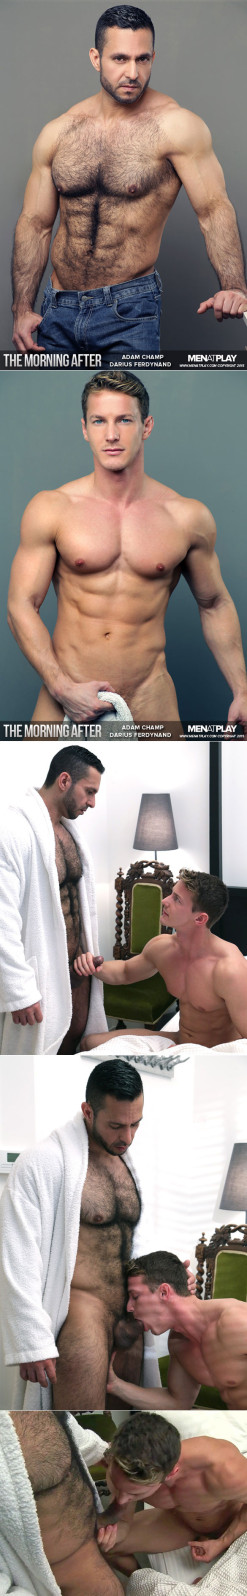 The-Morning-After-Starring-Adam-Champ---Darius-Ferdynand-v1.jpg